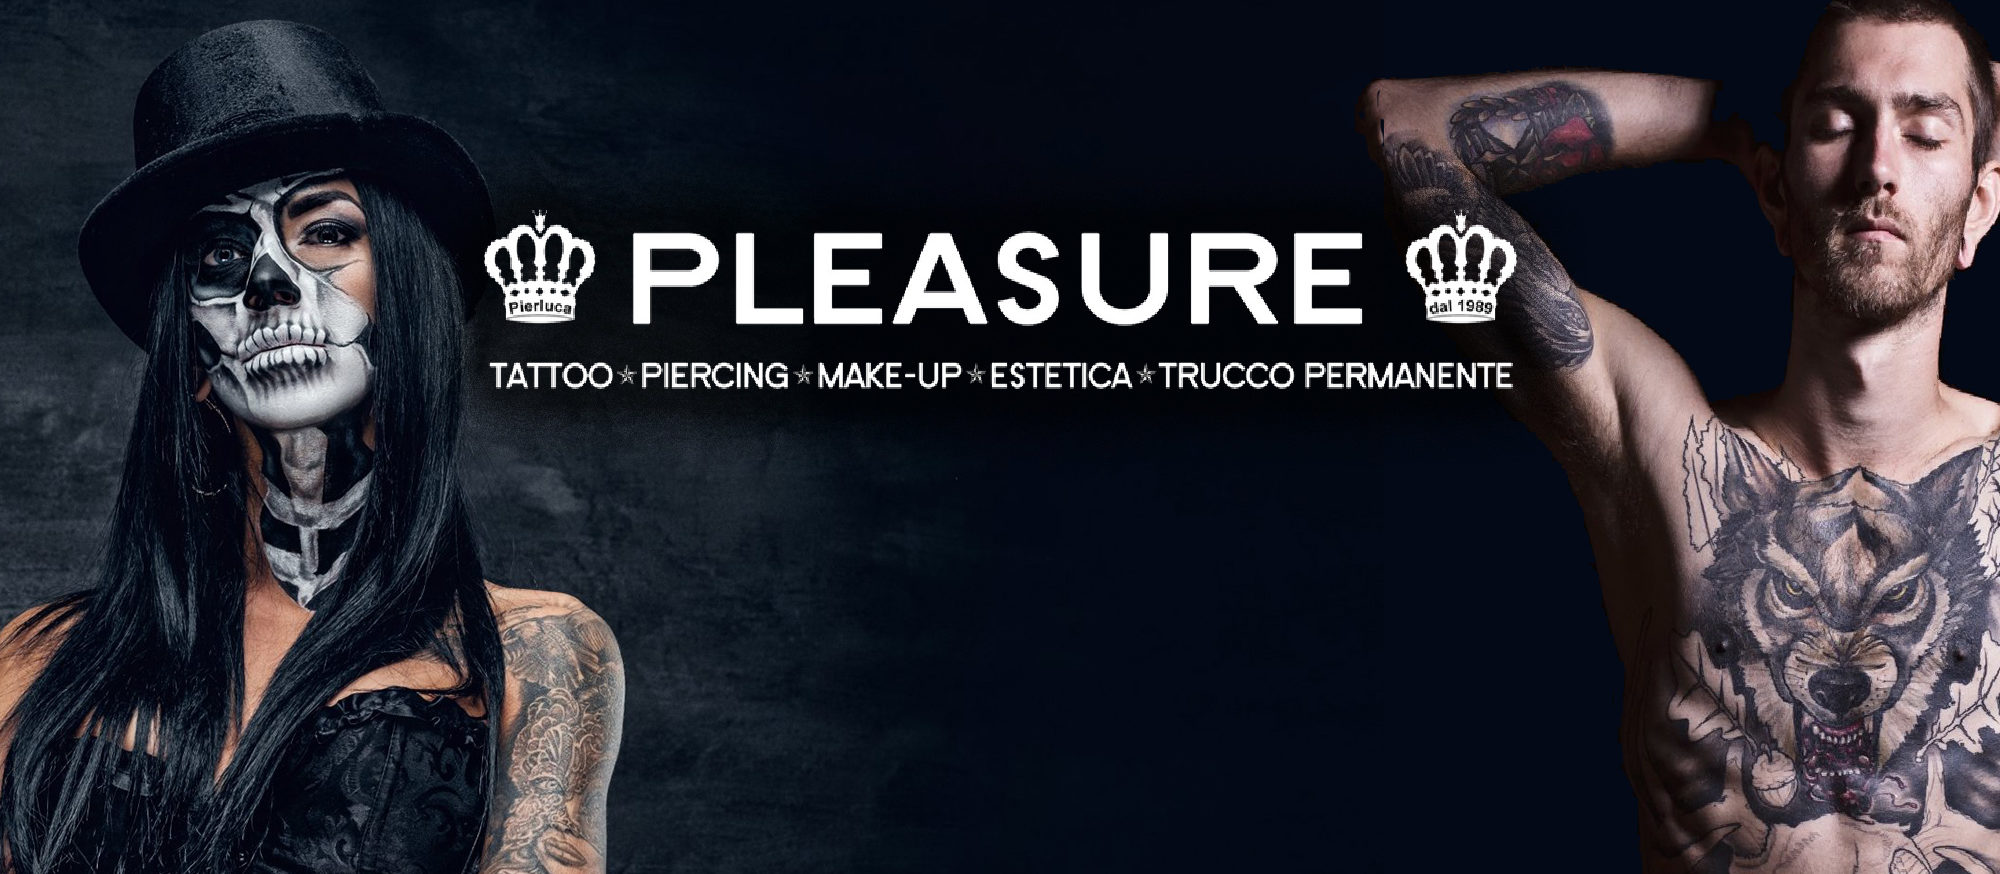 Pleasure Tattoo Parlour – Tatuaggi & Piercing 